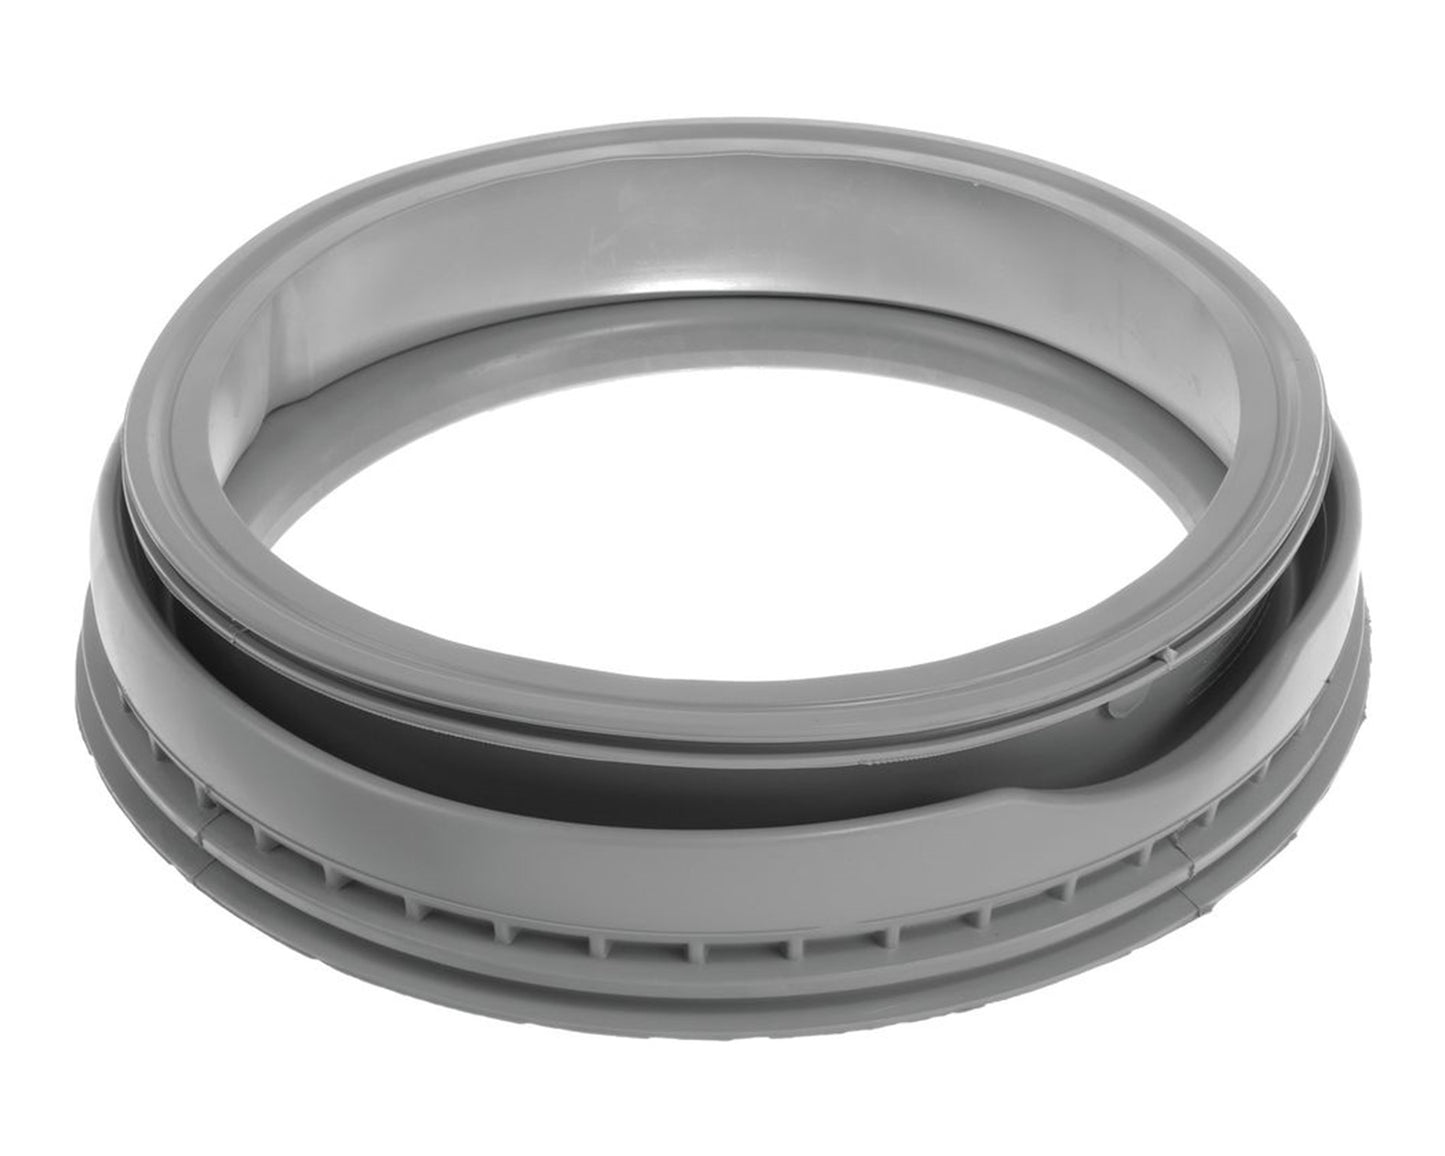 Washing Machine Rubber Door Gasket Seal for Bosch Maxx WAE24164GB/22, WFO2867GB/12 - 00354135